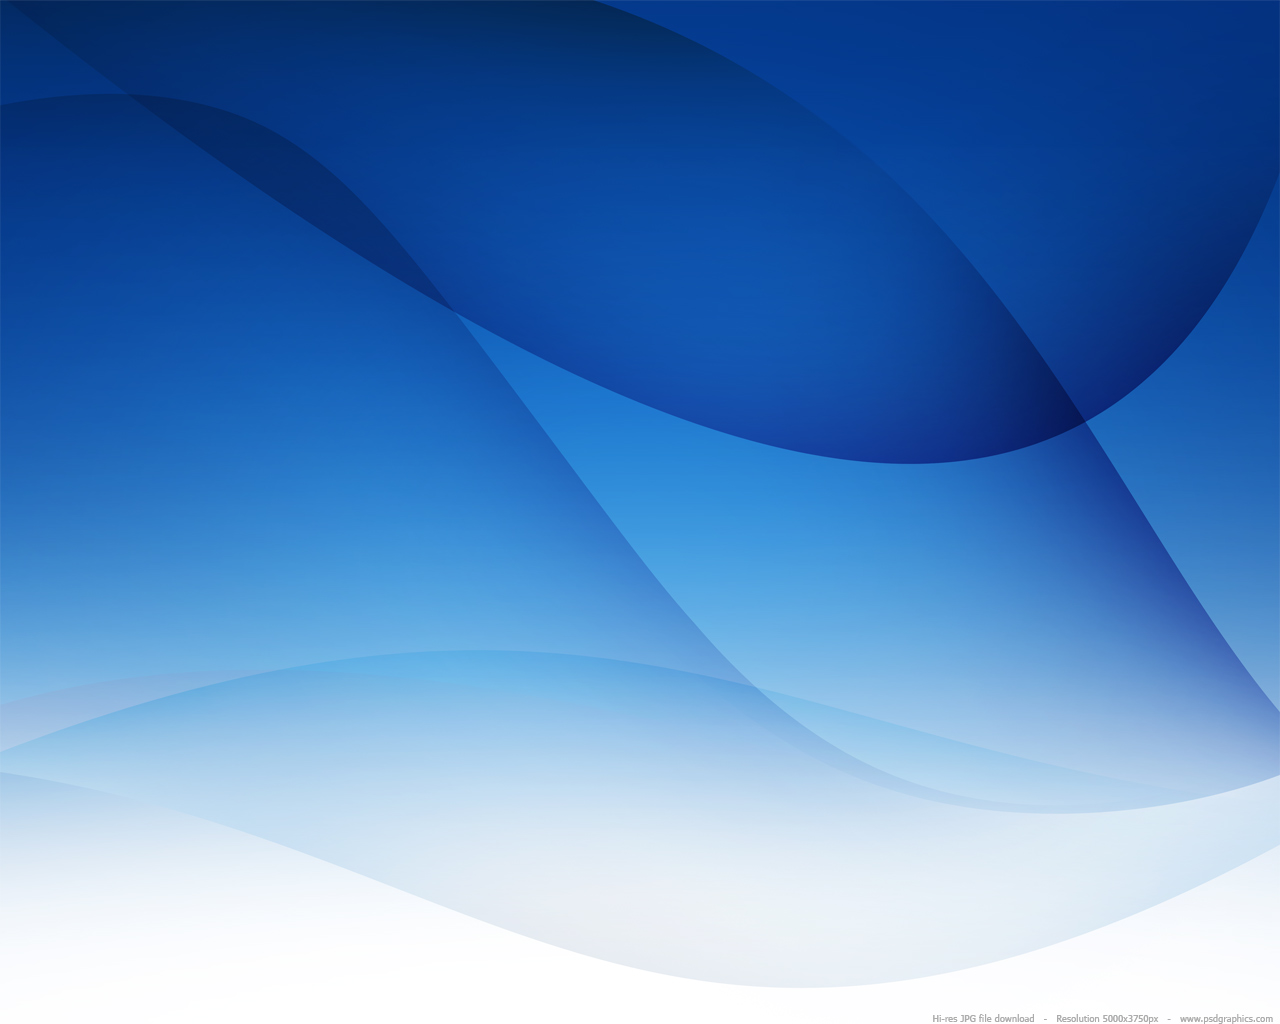 Format Jpg Color Theme Blue White Keywords Creative Modern Background